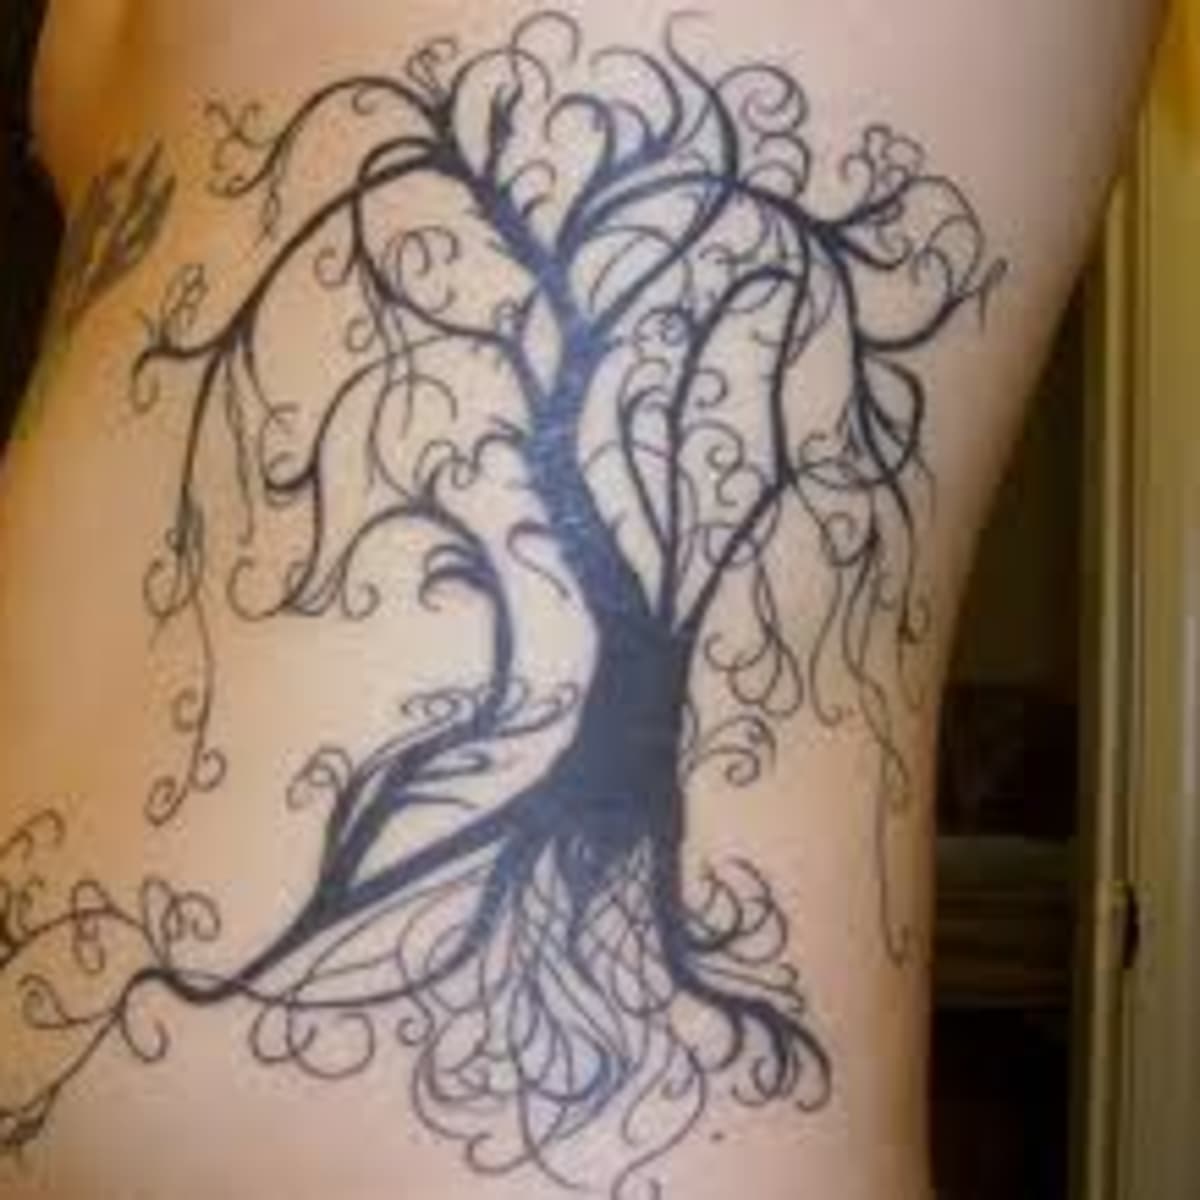 3027 Tree Life Tattoo Images Stock Photos  Vectors  Shutterstock